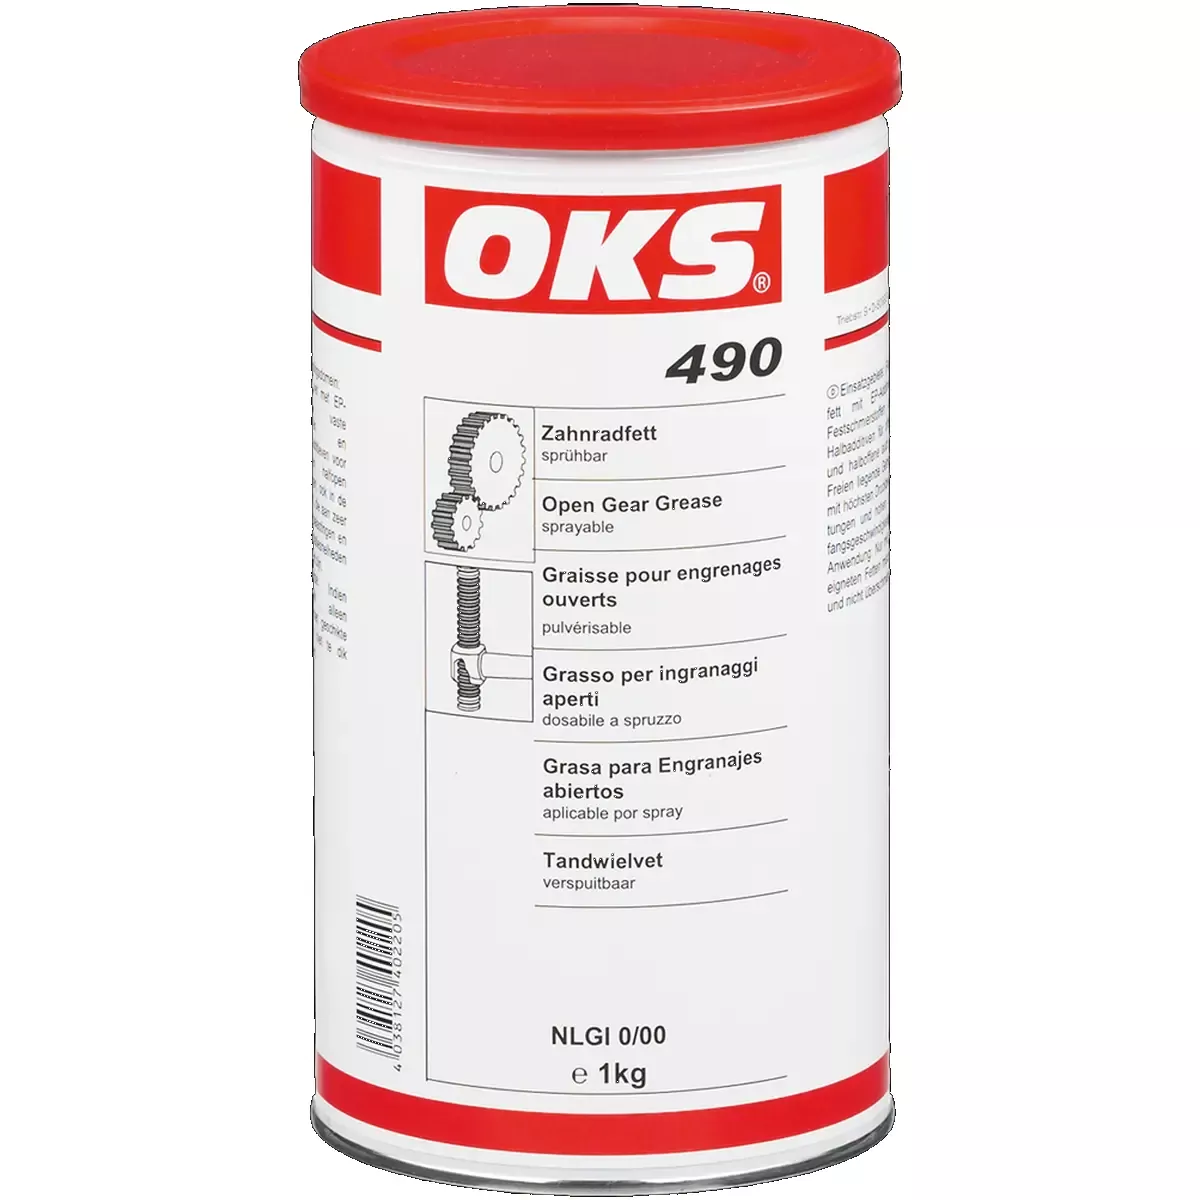 Zahnradfett OKS 490, 1 kg Dose